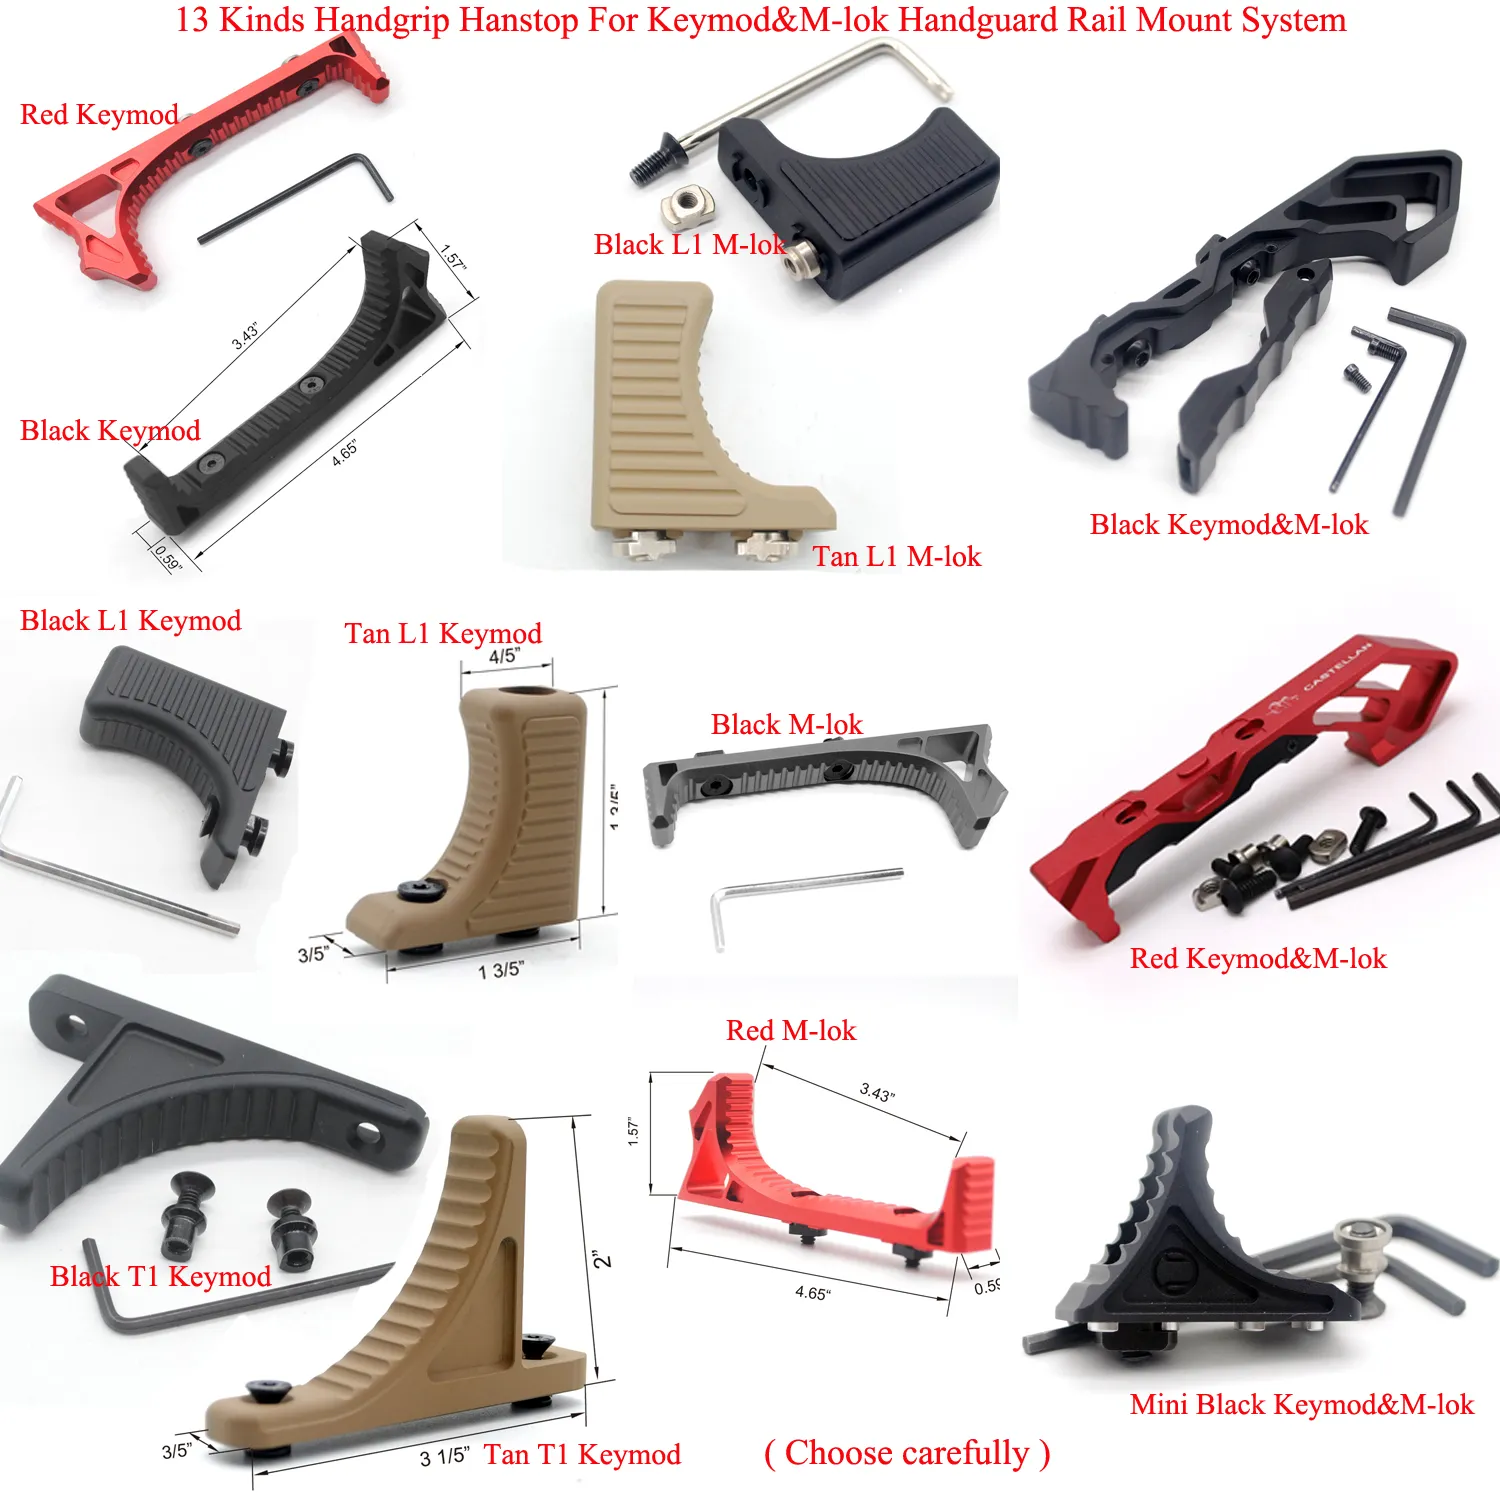 13 Arten taktischer Handstopp Keymod/M-lok Handstop Schwarz/Rot/Tan Farben Aluminium für verschiedene Handschutz-Schienensysteme